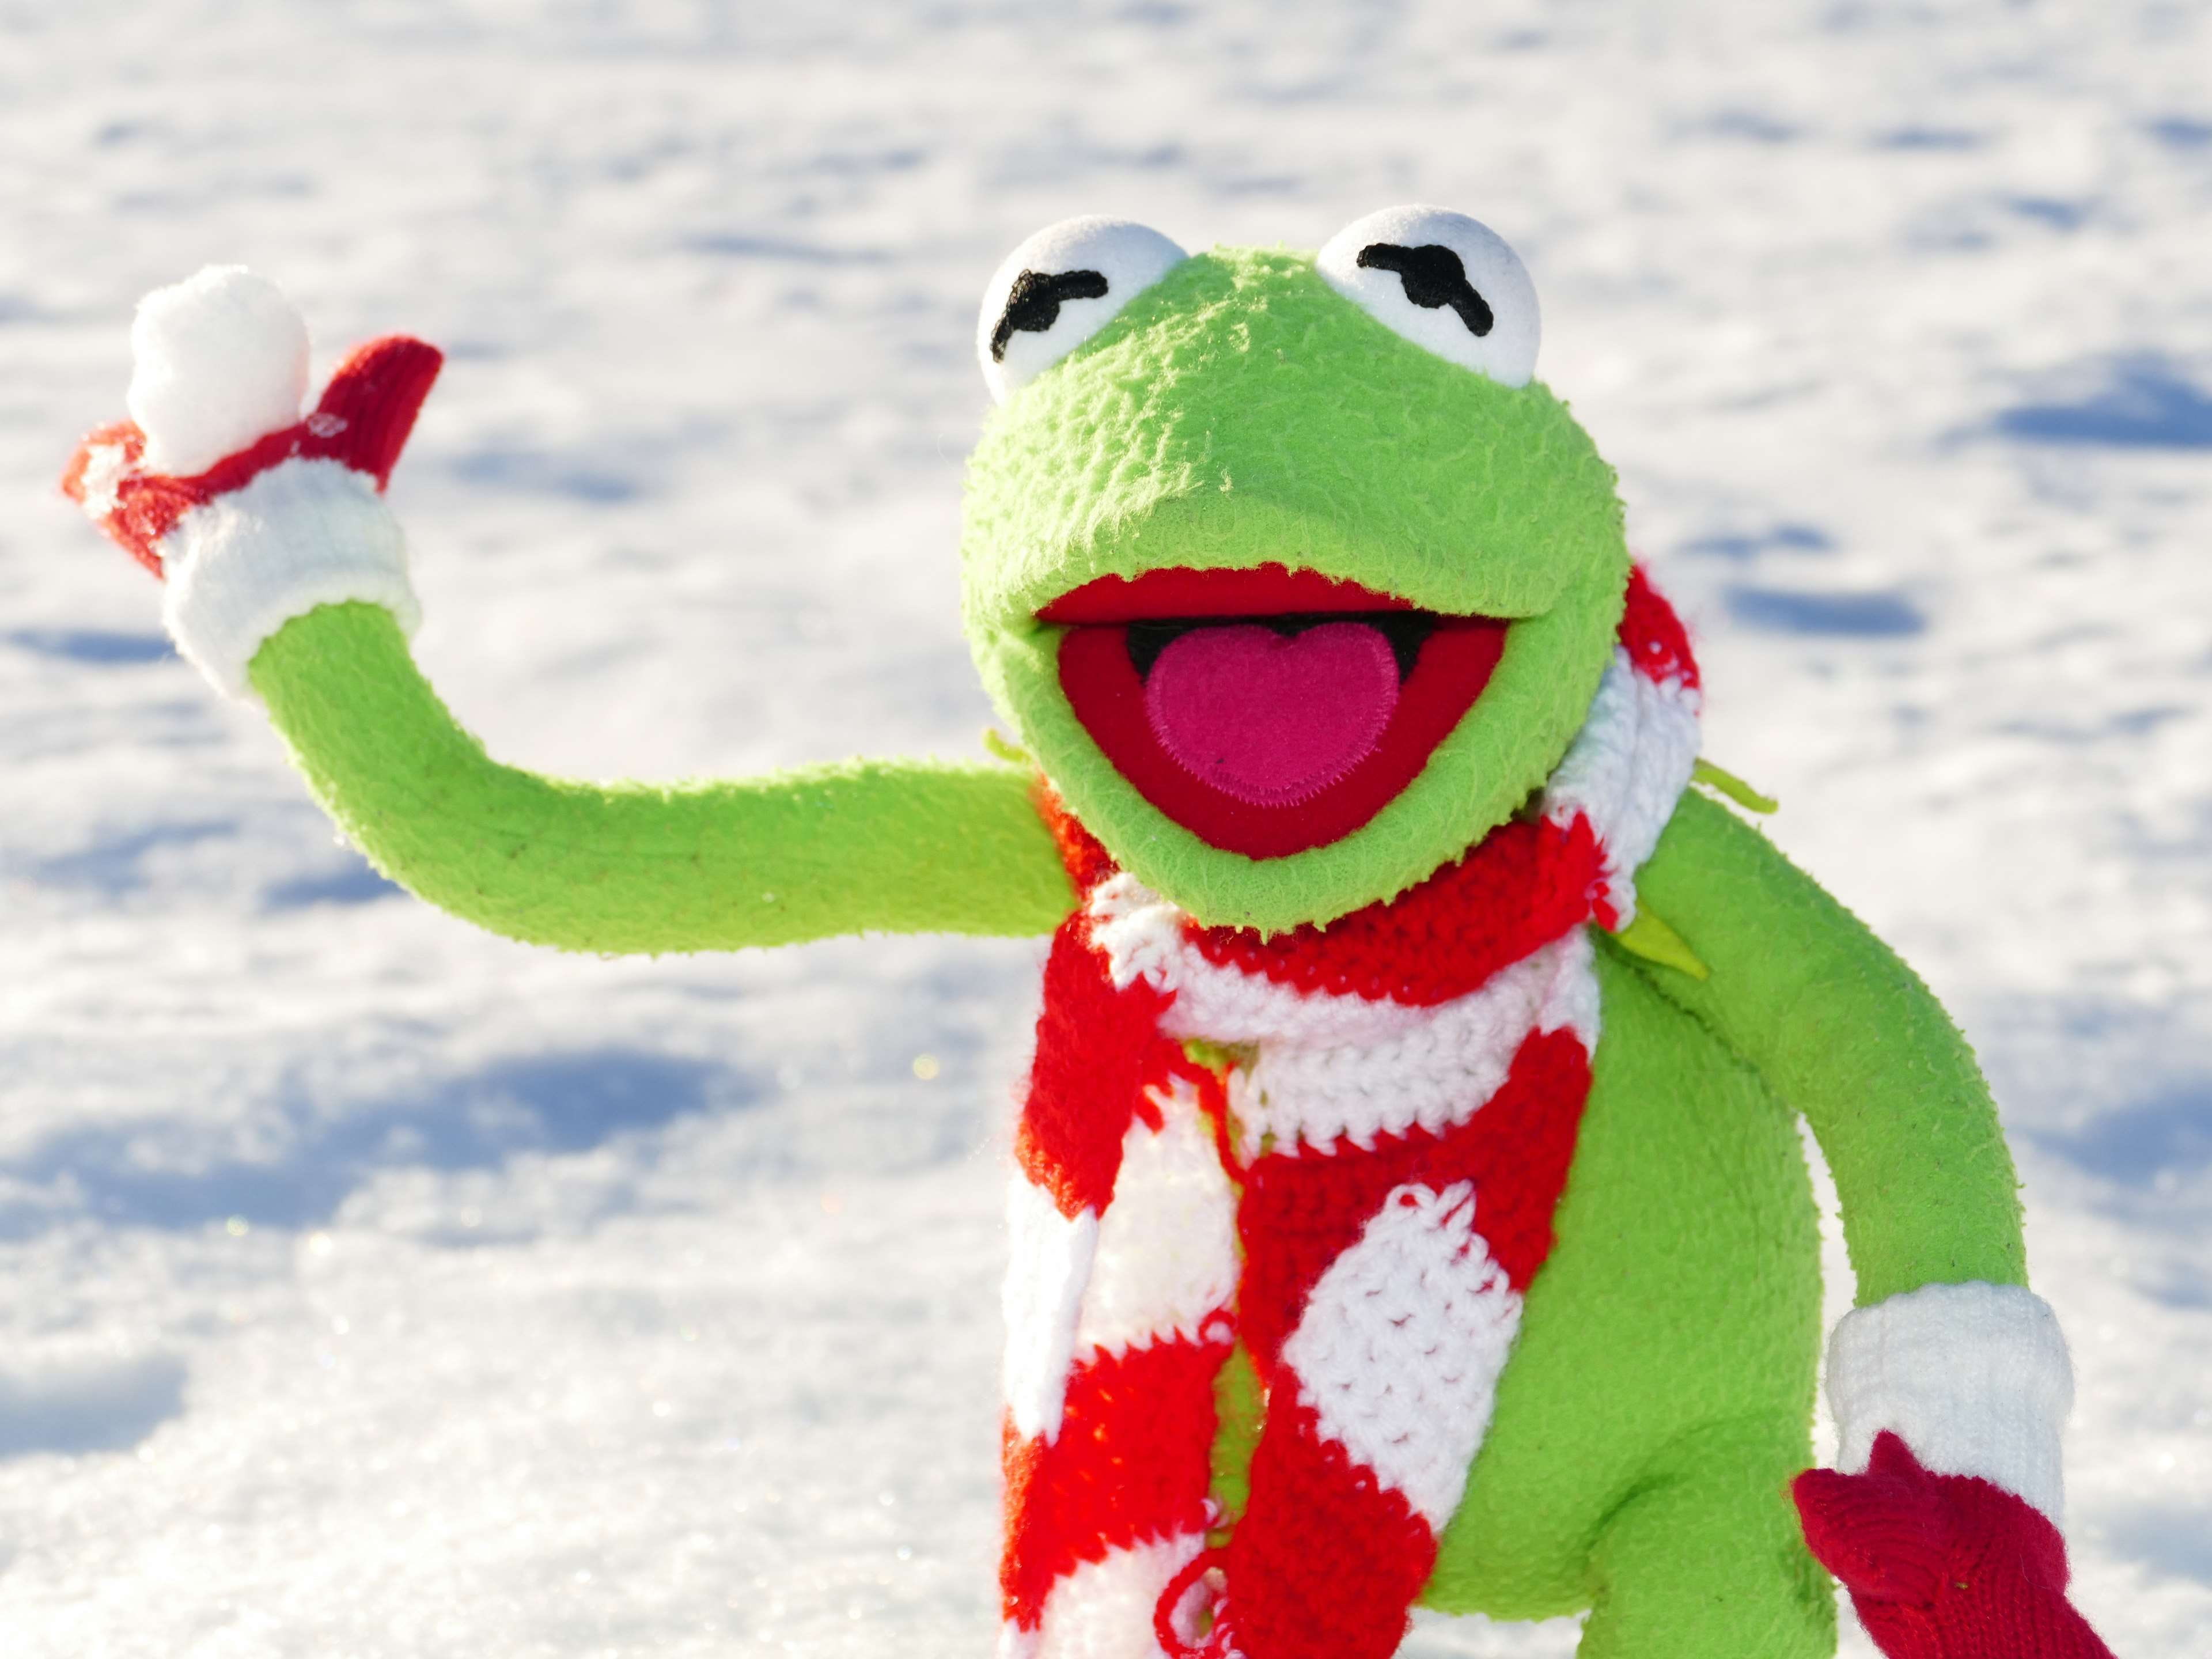 cold, fig, frog, fun, kermit, snow, snow ball, throw, winter